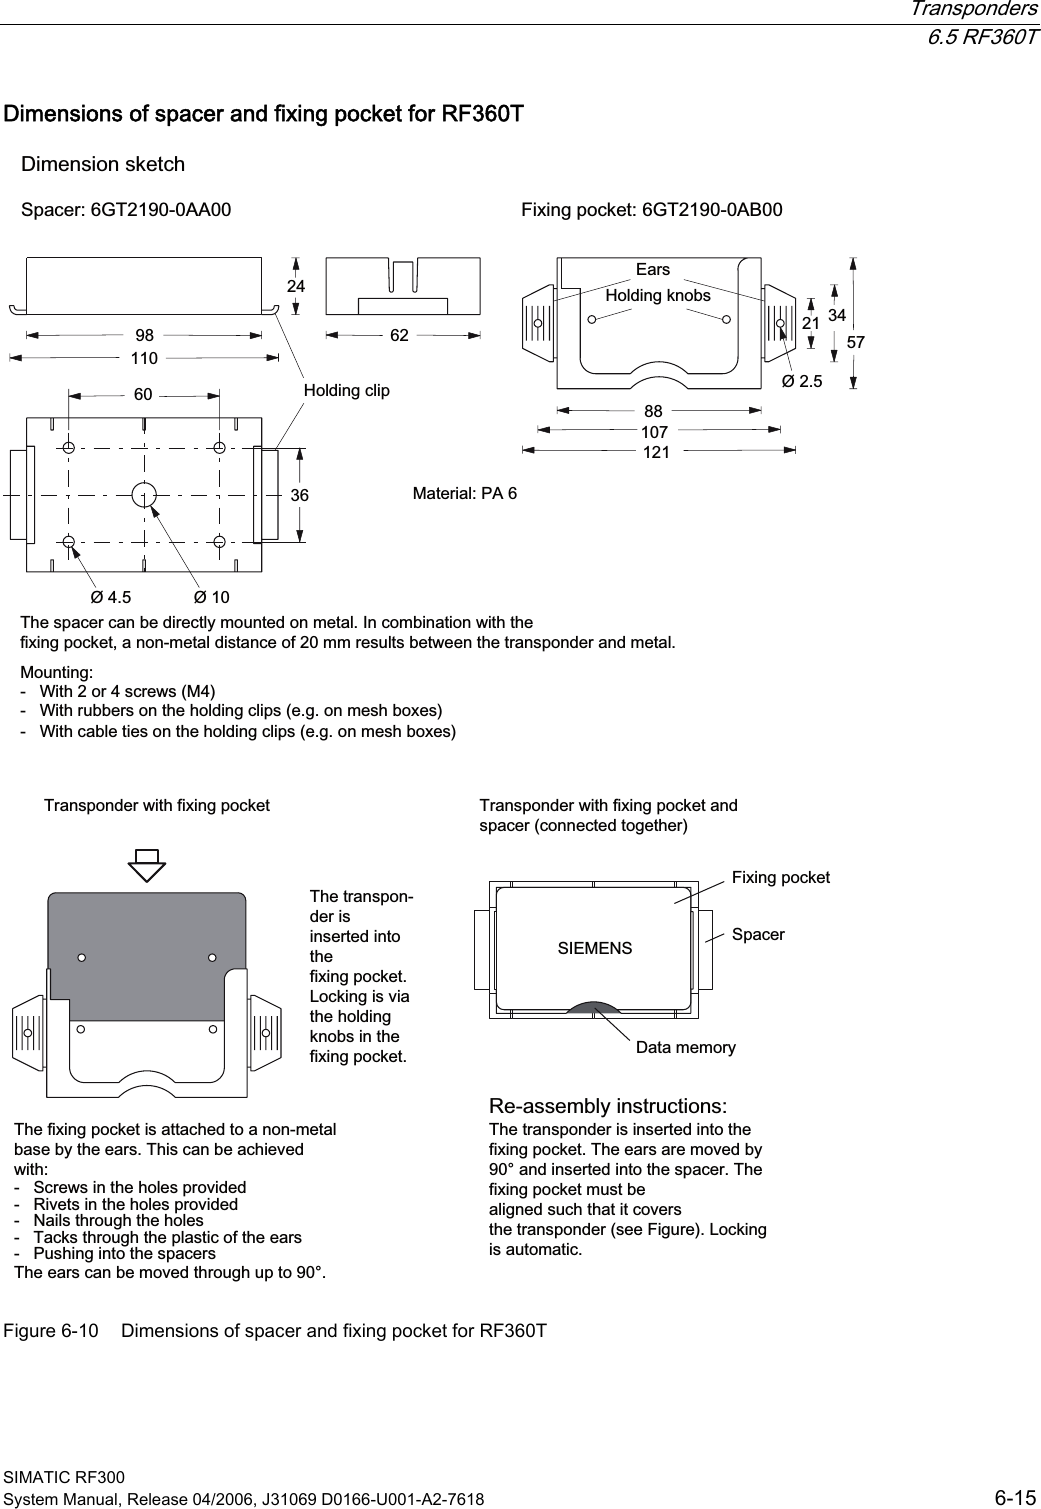  Transponders  6.5 RF360T SIMATIC RF300 System Manual, Release 04/2006, J31069 D0166-U001-A2-7618  6-15 Dimensions of spacer and fixing pocket for RF360T +ROGLQJFOLS7KHVSDFHUFDQEHGLUHFWO\PRXQWHGRQPHWDO,QFRPELQDWLRQZLWKWKHIL[LQJSRFNHWDQRQPHWDOGLVWDQFHRIPPUHVXOWVEHWZHHQWKHWUDQVSRQGHUDQGPHWDO0RXQWLQJ:LWKRUVFUHZV0:LWKUXEEHUVRQWKHKROGLQJFOLSVHJRQPHVKER[HV:LWKFDEOHWLHVRQWKHKROGLQJFOLSVHJRQPHVKER[HV(DUV+ROGLQJNQREV&apos;LPHQVLRQVNHWFK6SDFHU*7$$ )L[LQJSRFNHW*7$%7KHIL[LQJSRFNHWLVDWWDFKHGWRDQRQPHWDOEDVHE\WKHHDUV7KLVFDQEHDFKLHYHGZLWK6FUHZVLQWKHKROHVSURYLGHG5LYHWVLQWKHKROHVSURYLGHG1DLOVWKURXJKWKHKROHV7DFNVWKURXJKWKHSODVWLFRIWKHHDUV3XVKLQJLQWRWKHVSDFHUV7KHHDUVFDQEHPRYHGWKURXJKXSWRr7KHWUDQVSRQGHULVLQVHUWHGLQWRWKHIL[LQJSRFNHW/RFNLQJLVYLDWKHKROGLQJNQREVLQWKHIL[LQJSRFNHW &apos;DWDPHPRU\6SDFHU)L[LQJSRFNHW7KHWUDQVSRQGHULVLQVHUWHGLQWRWKHIL[LQJSRFNHW7KHHDUVDUHPRYHGE\rDQGLQVHUWHGLQWRWKHVSDFHU7KHIL[LQJSRFNHWPXVWEHDOLJQHGVXFKWKDWLWFRYHUVWKHWUDQVSRQGHUVHH)LJXUH/RFNLQJLVDXWRPDWLF7UDQVSRQGHUZLWKIL[LQJSRFNHW 7UDQVSRQGHUZLWKIL[LQJSRFNHWDQGVSDFHUFRQQHFWHGWRJHWKHU0DWHULDO3$5HDVVHPEO\LQVWUXFWLRQV6,(0(16 Figure 6-10  Dimensions of spacer and fixing pocket for RF360T 